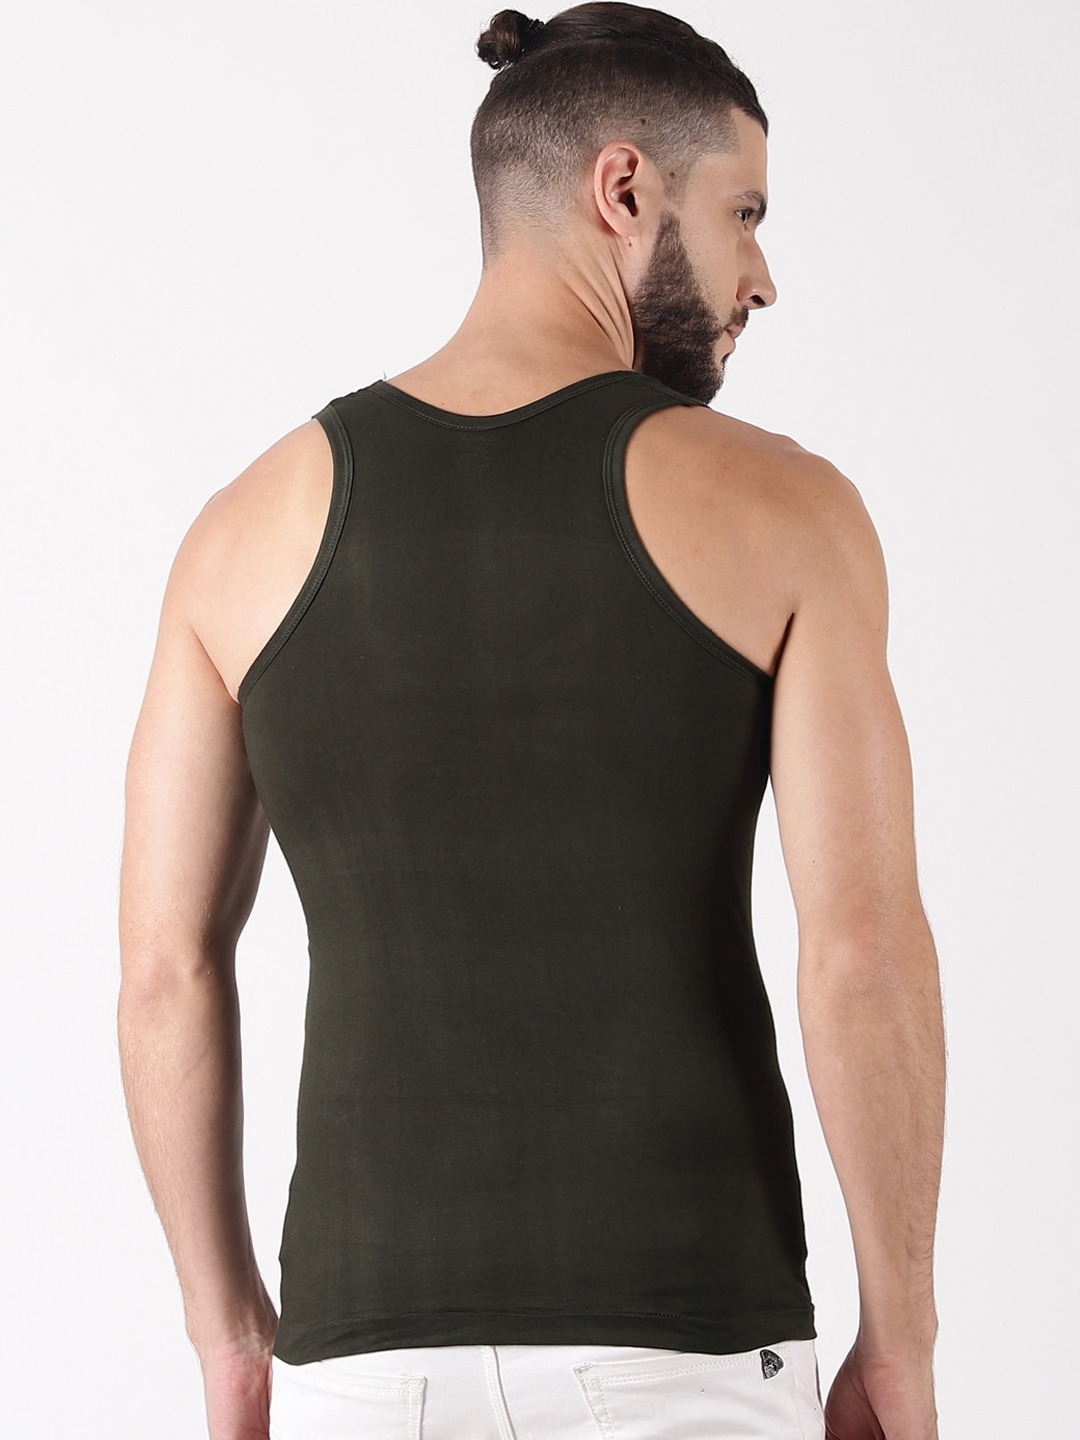 Clothing Innerwear Vests | Dollar Lehar Men Pack Of 3 Assorted Innerwear Vest MLHVE-01-PO3-ASST1 - JU44780